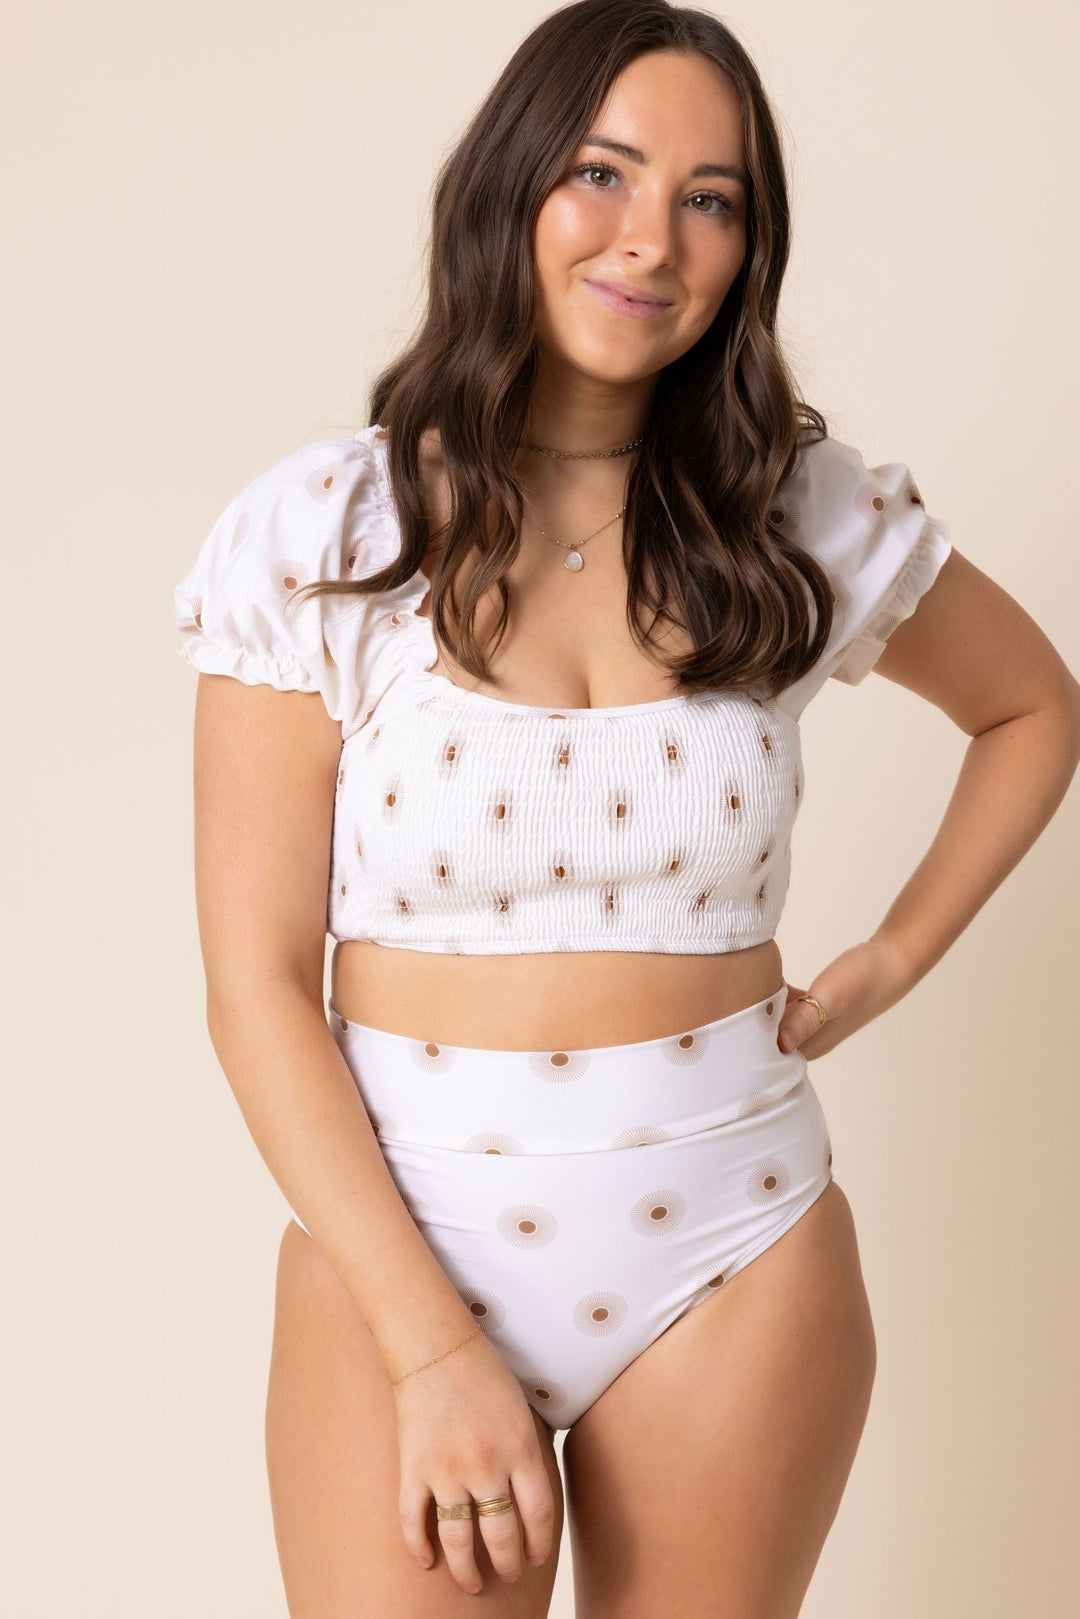 Women's Sleeved Bikini | Suns - Mindy Mae's Marketcomfy cute hoodies